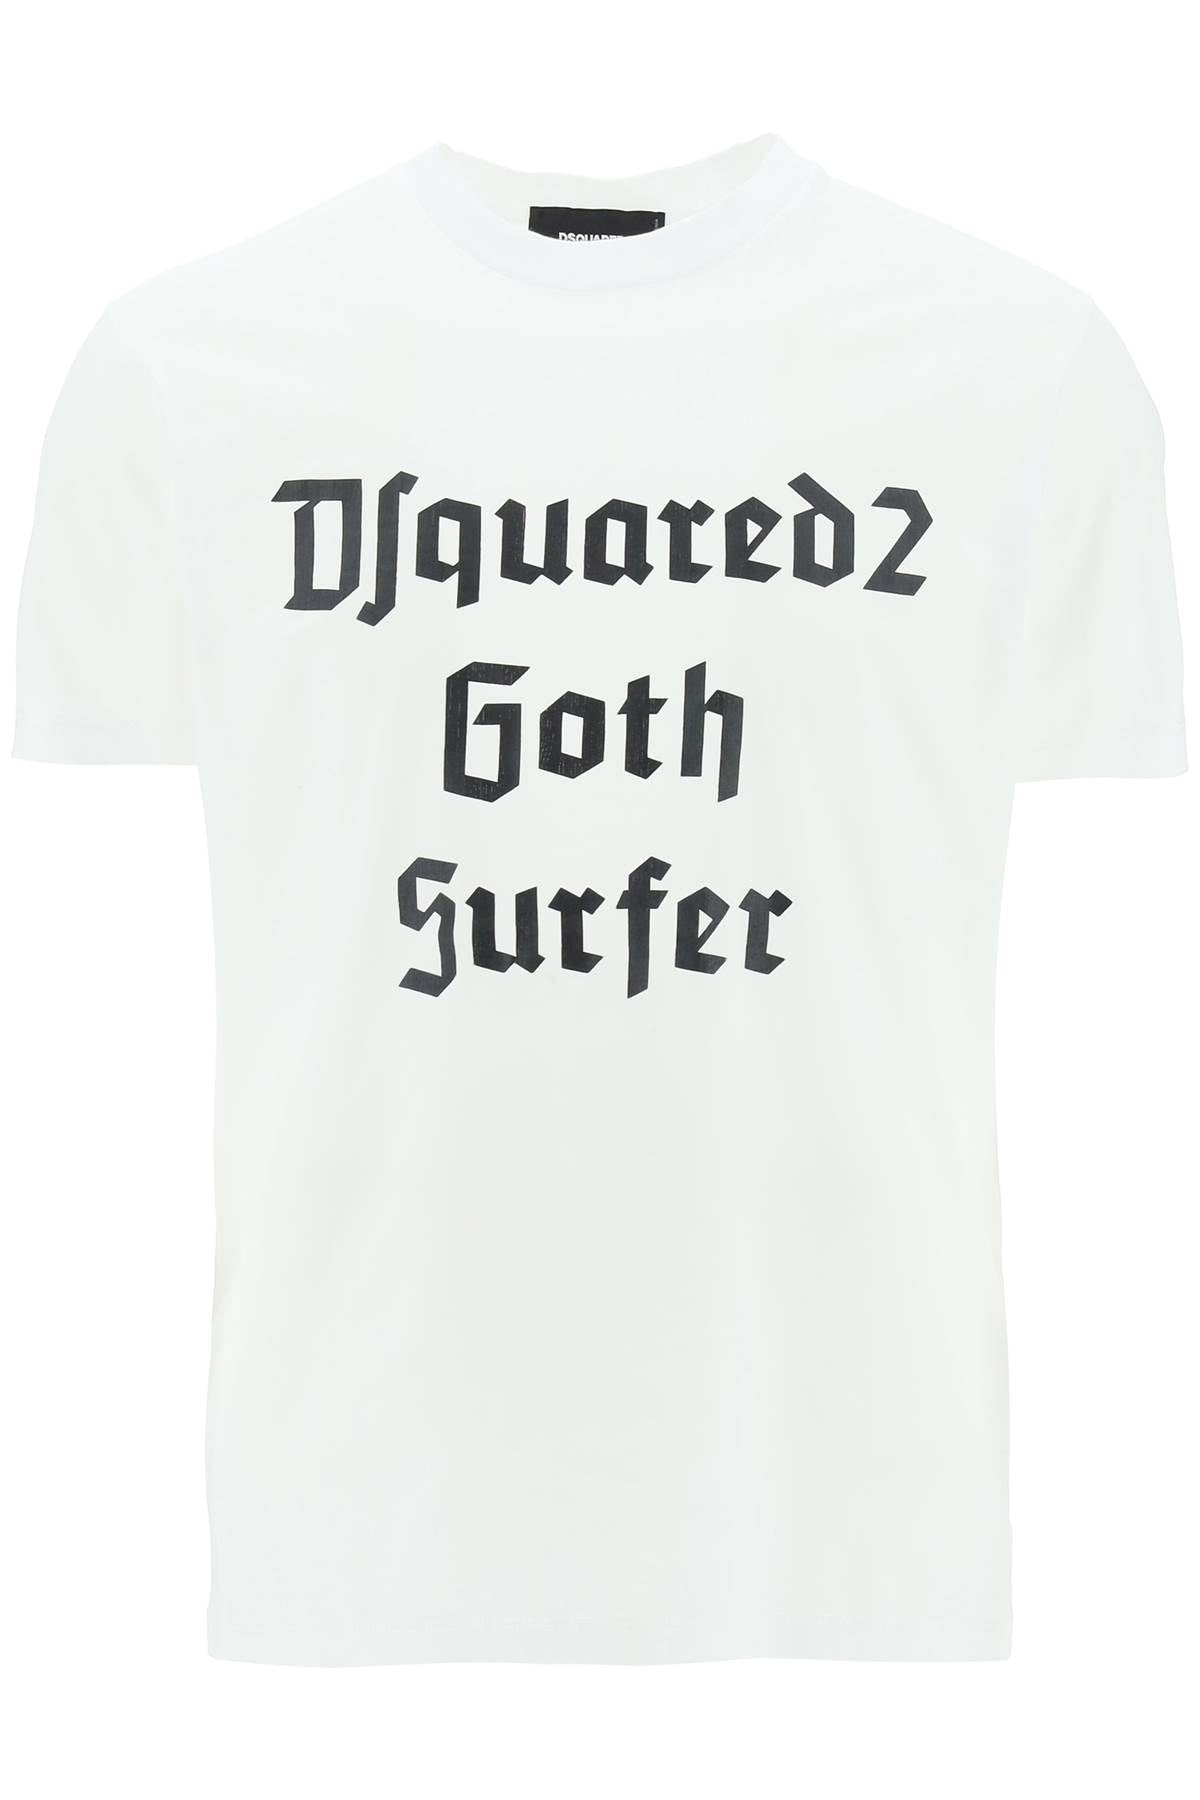 Dsquared2 'd2 goth surfer' t-shirt S74GD1085 S23009 WHITE